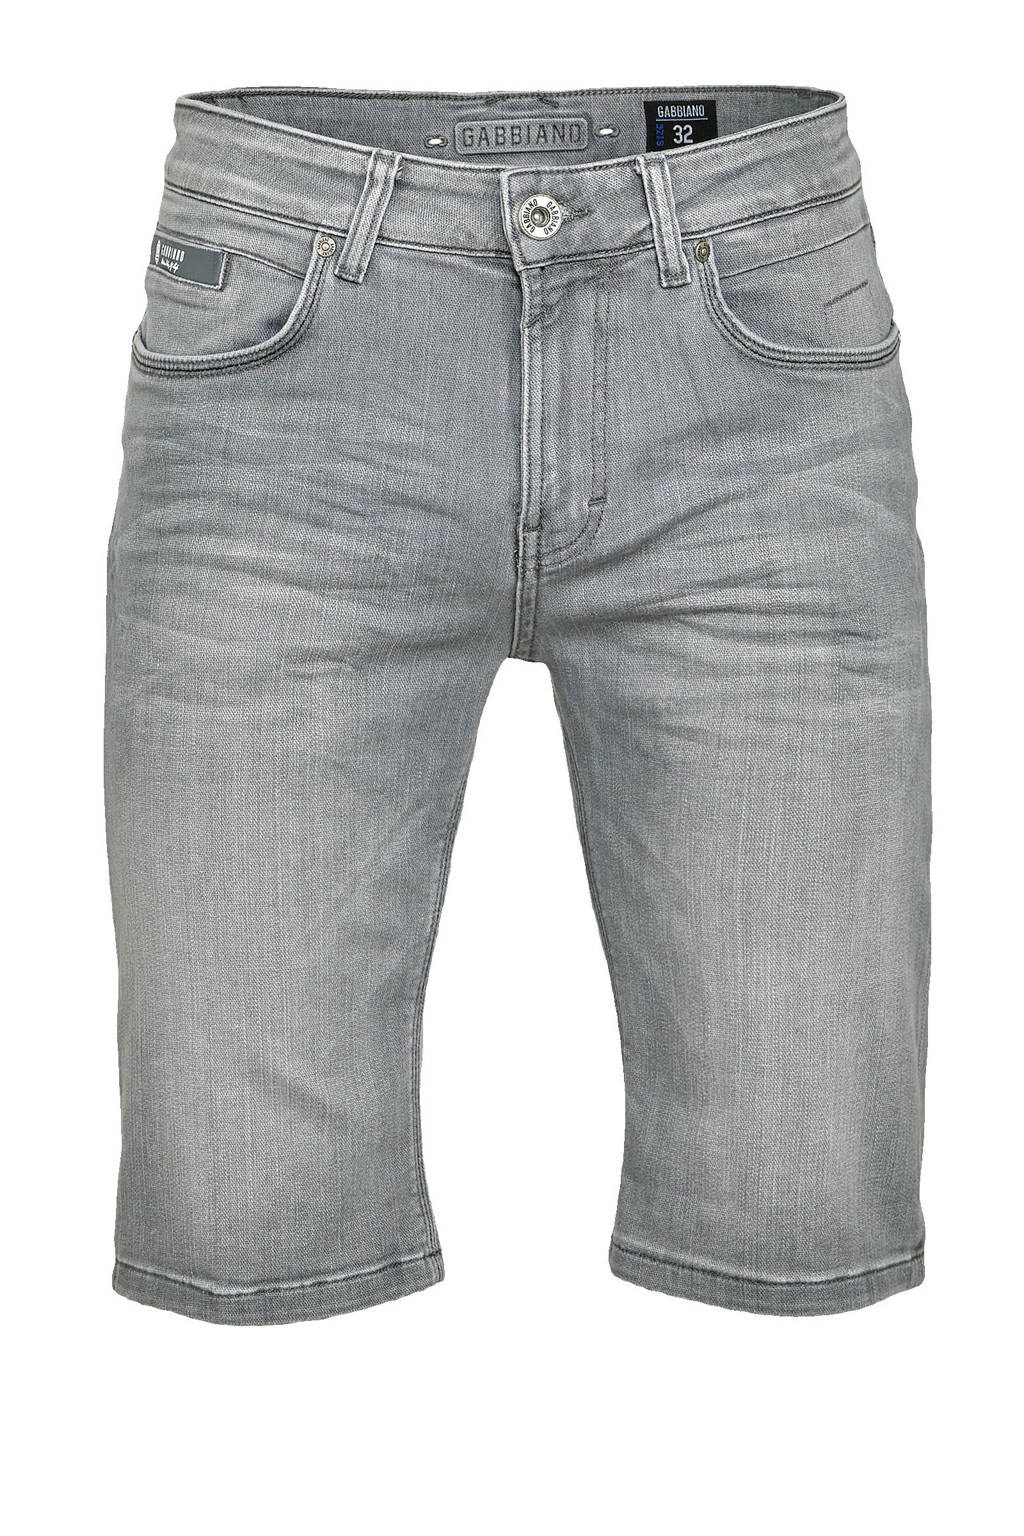 GABBIANO slim fit jeans short 82726 grey